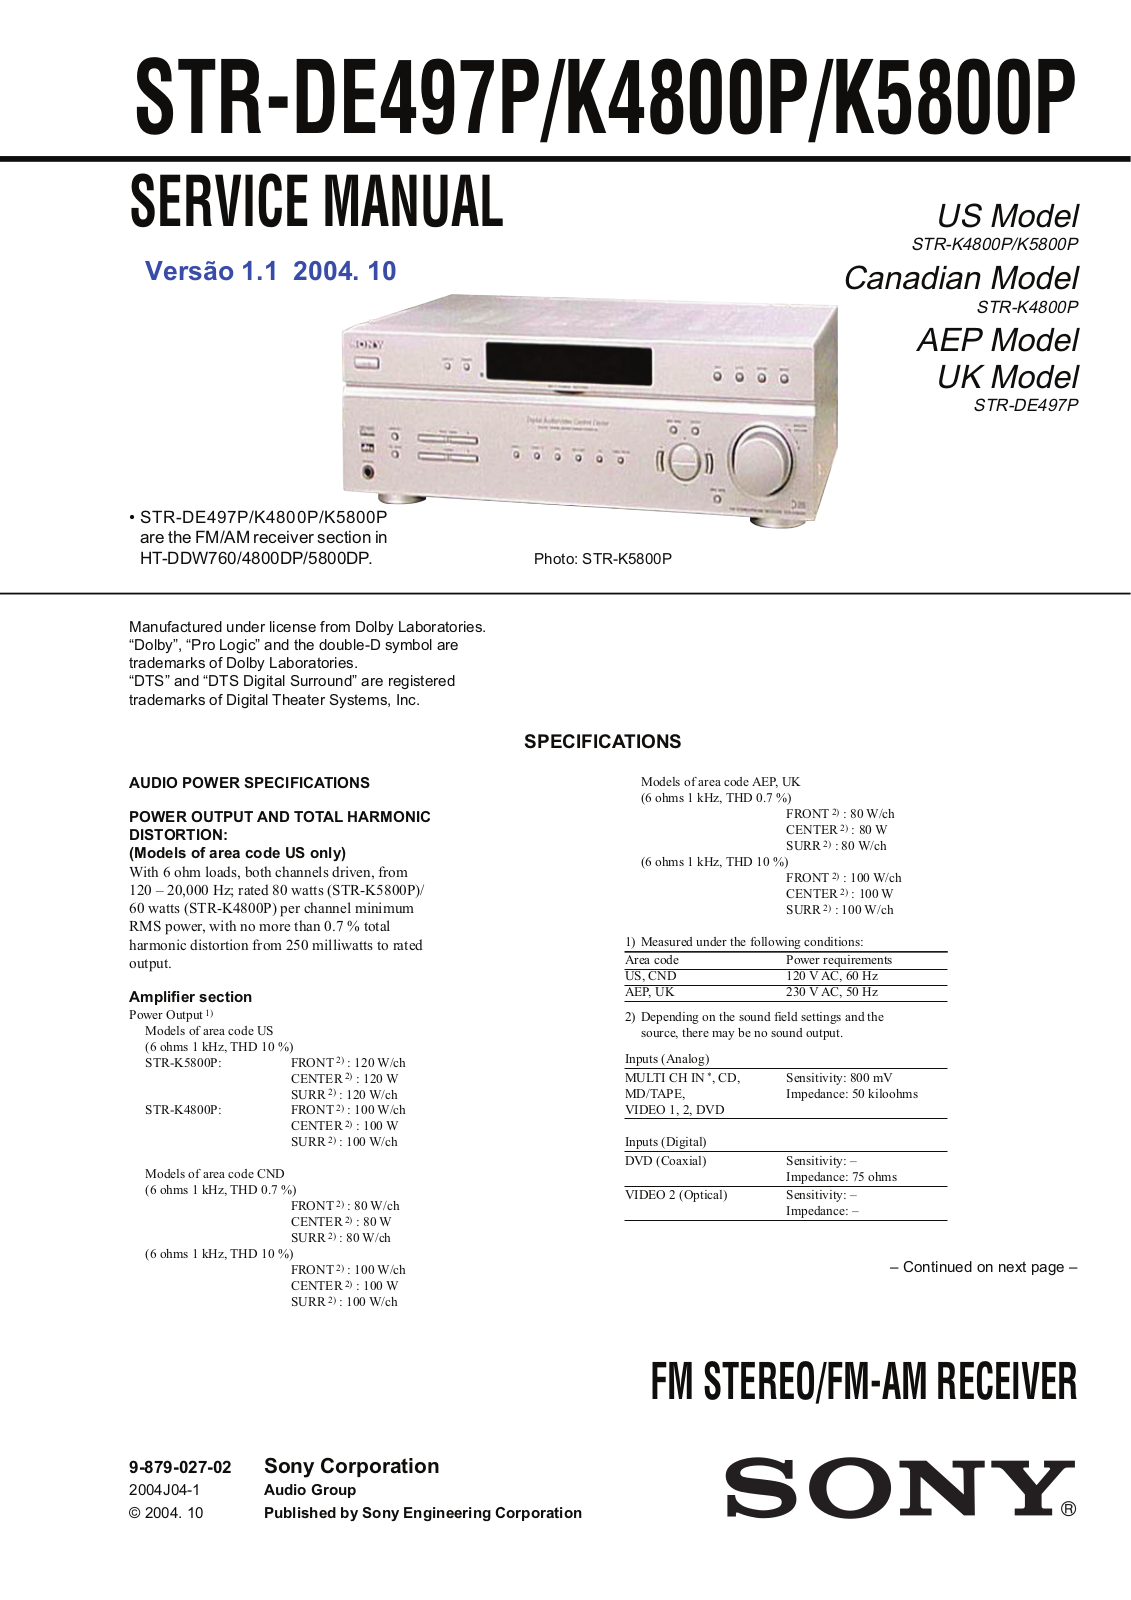 Sony STR-DE497, STR-K4800P, STR-K5800P Schematic